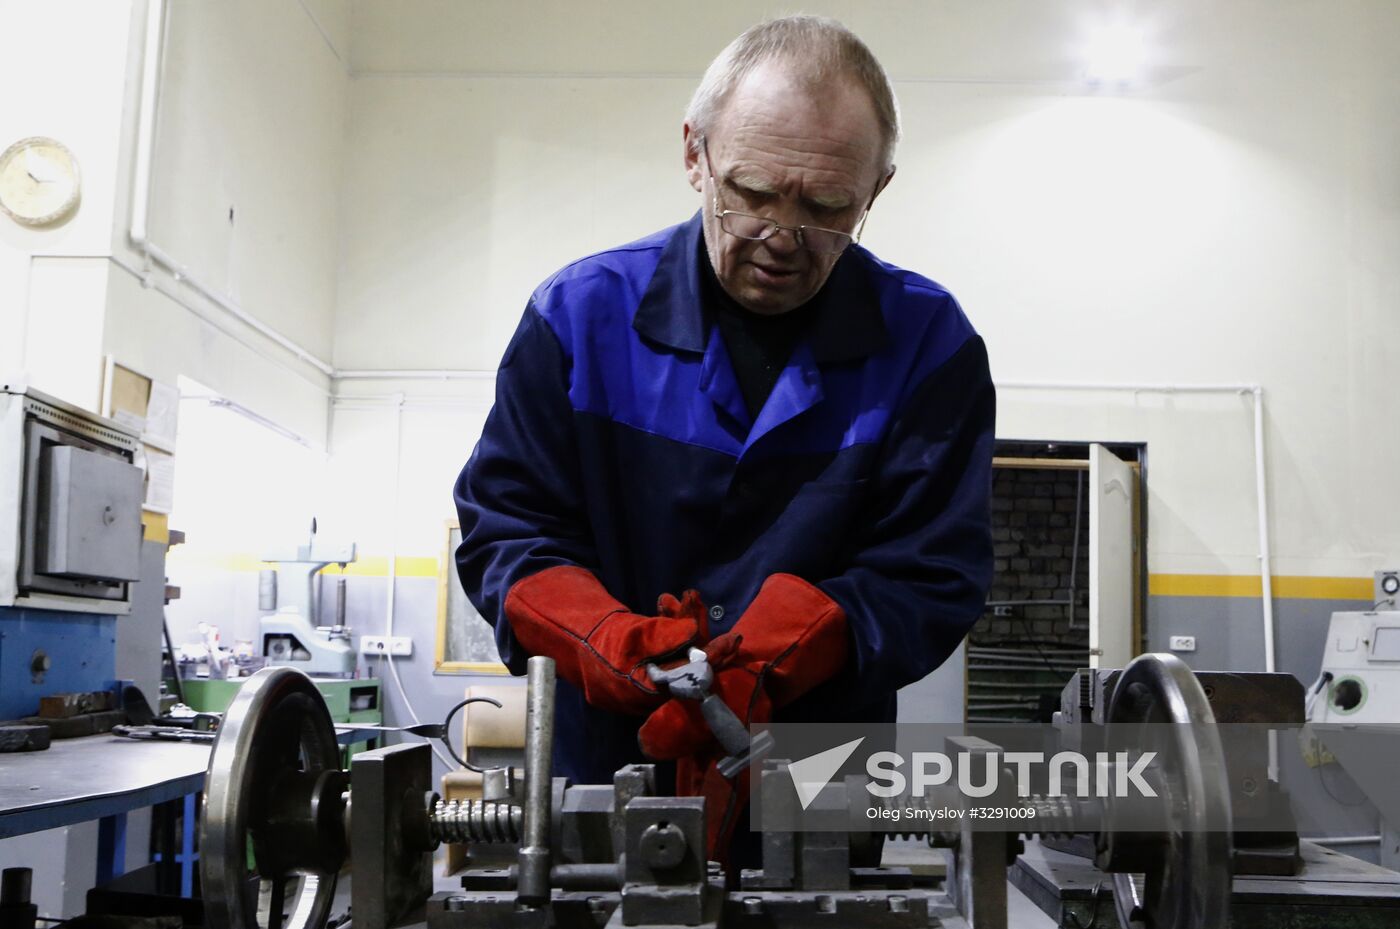 Production of micro engines in Yaroslavl Region